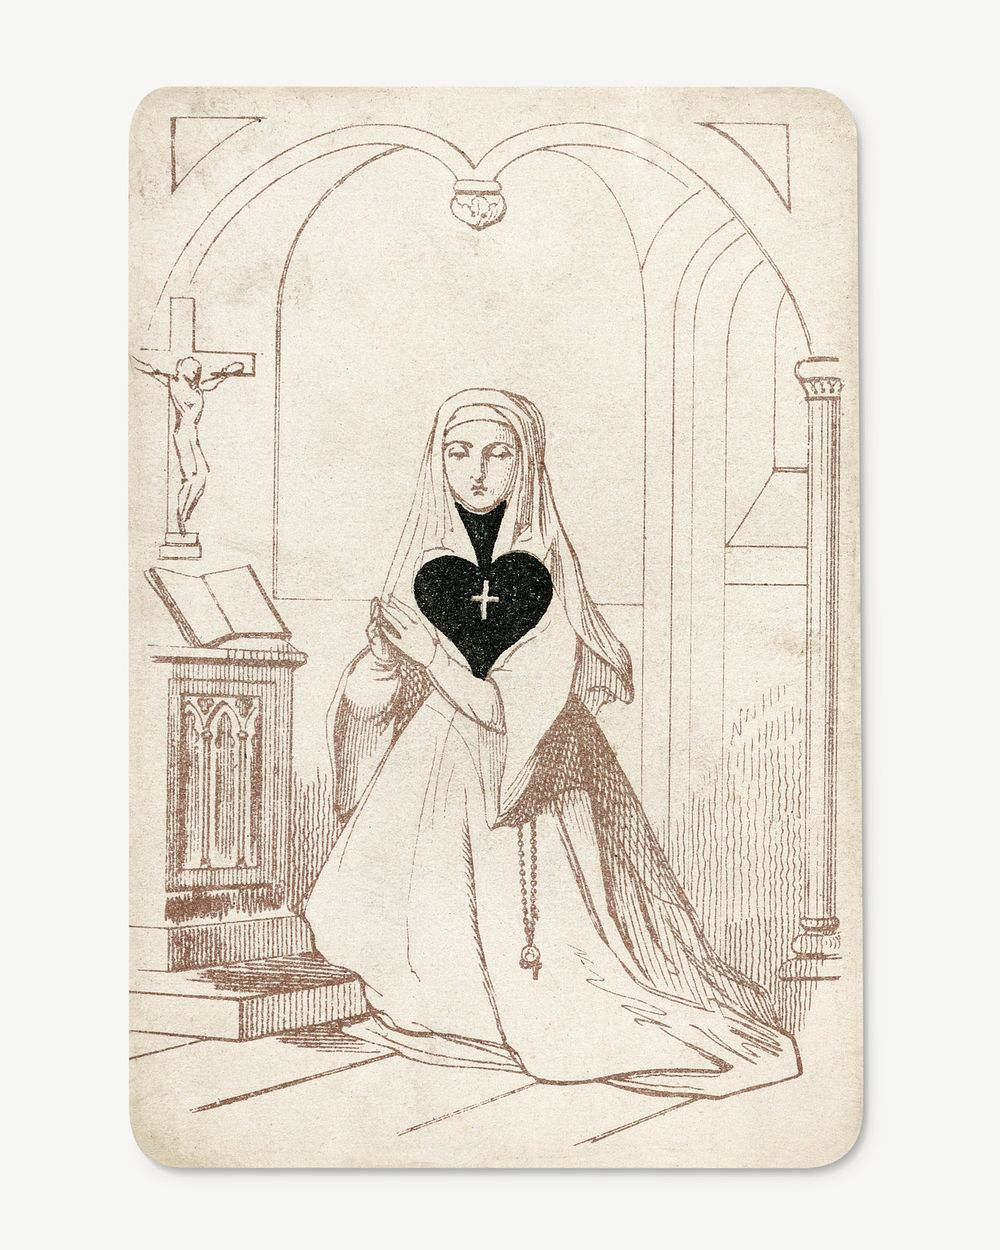 Vintage nun sketch illustration psd. Remixed by rawpixel.